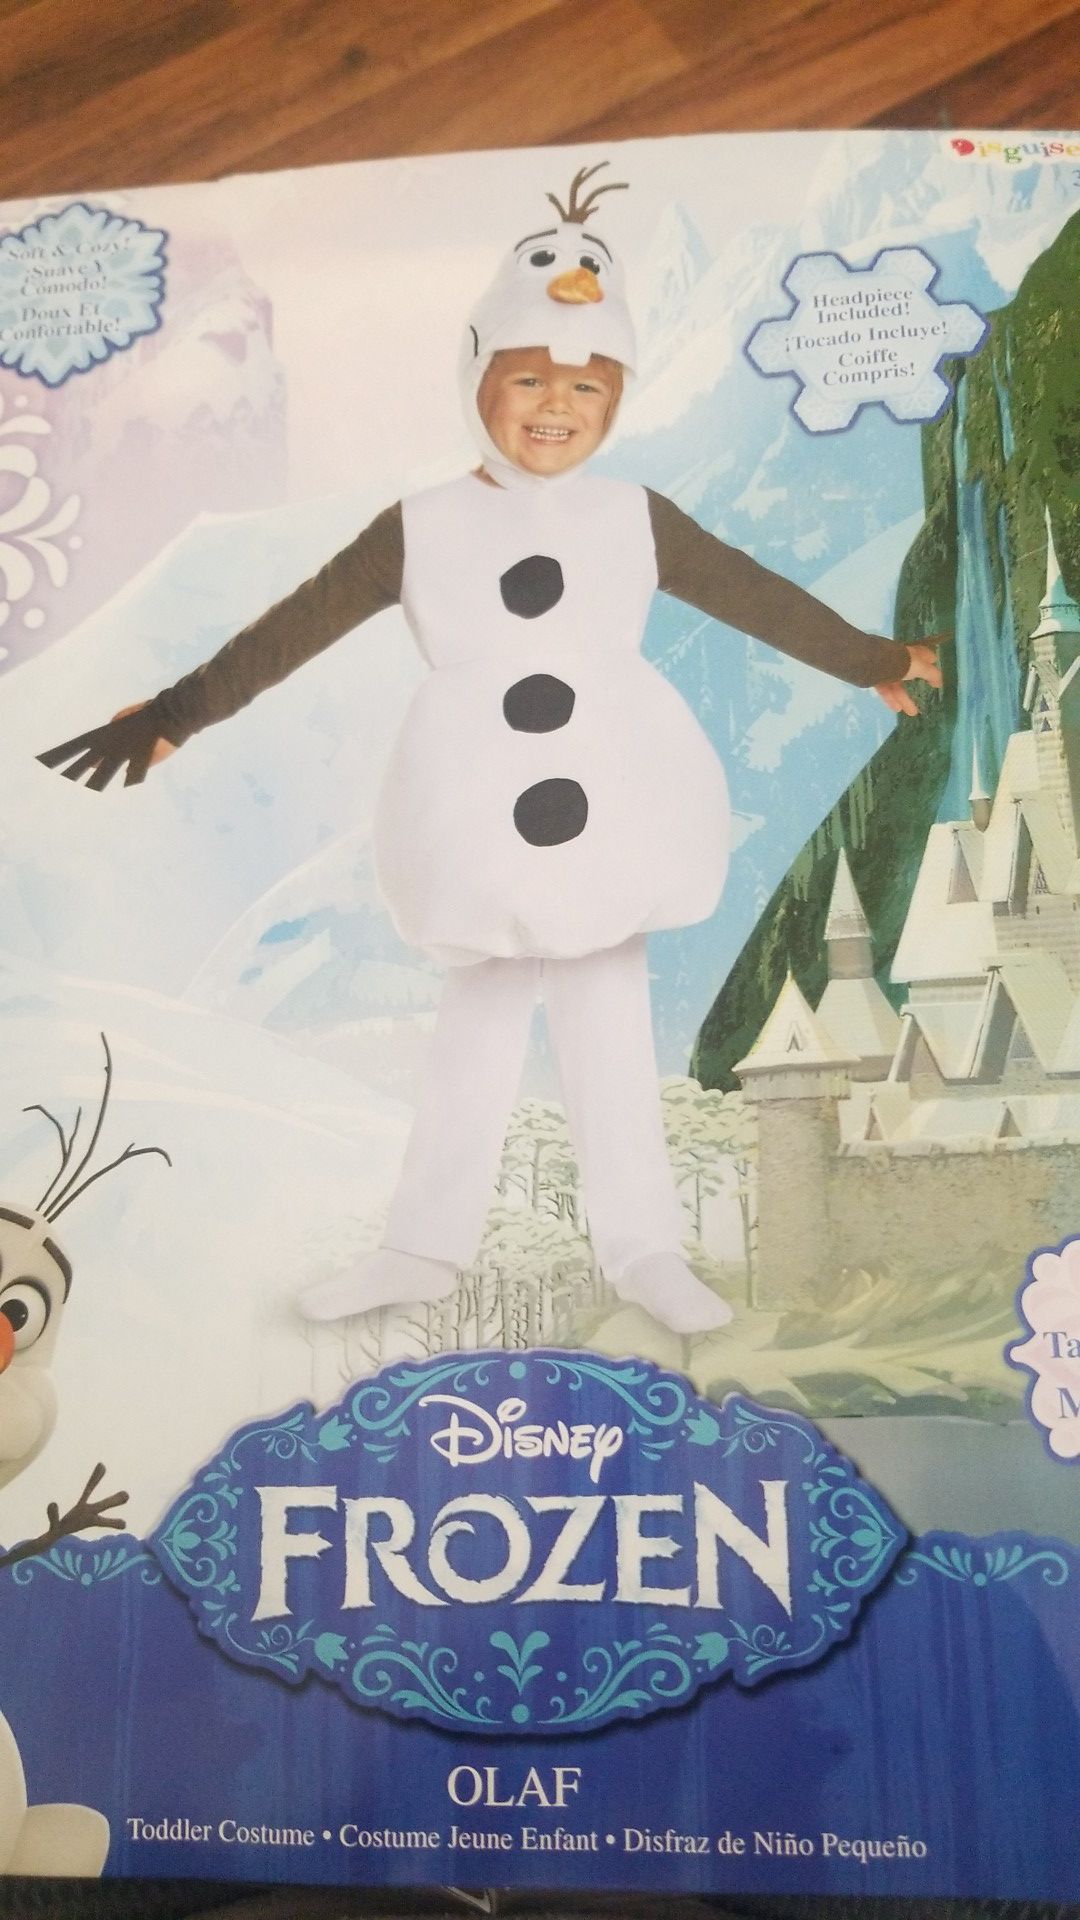 Frozen Olaf costume